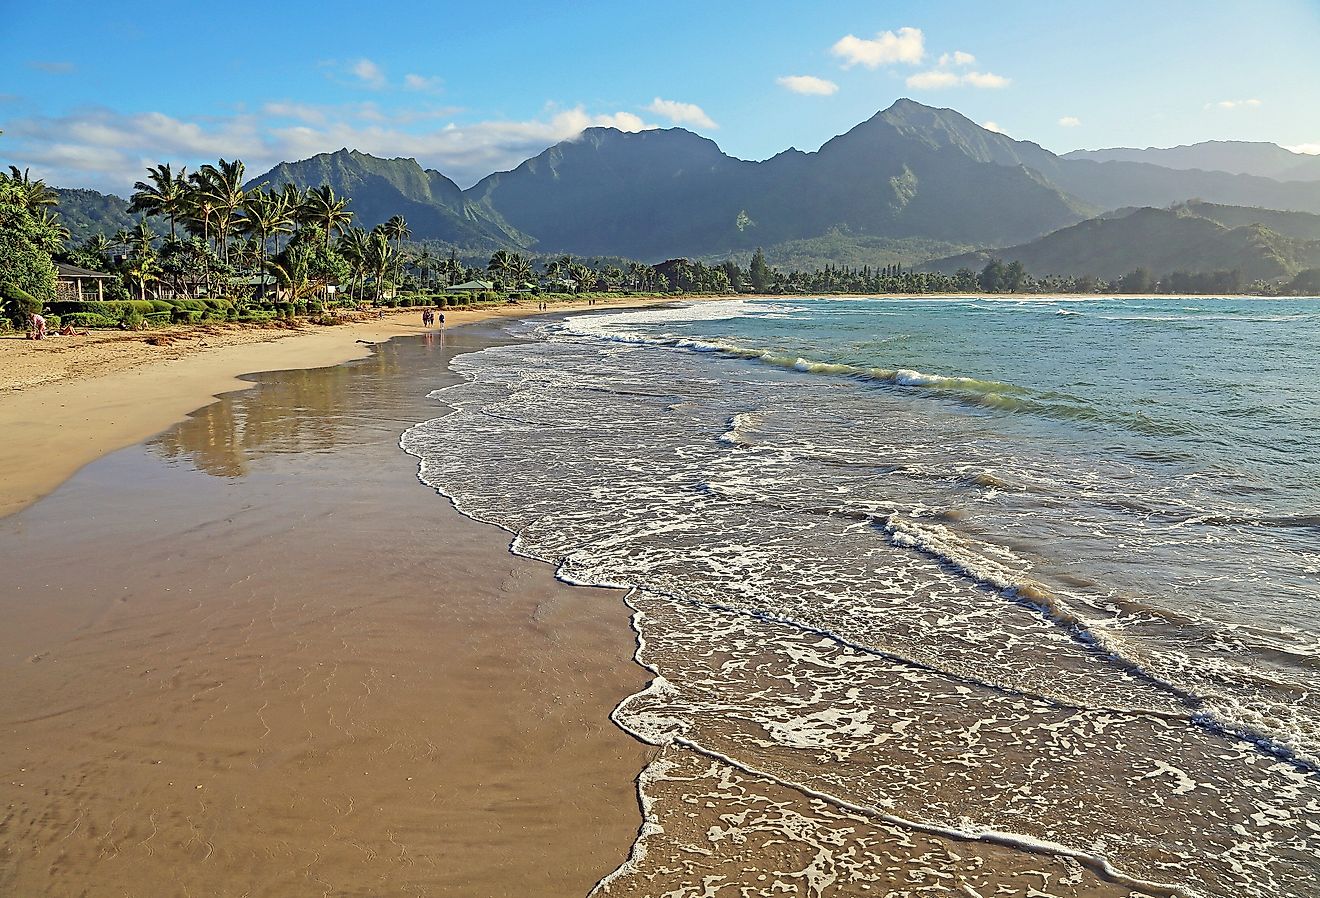 Scenic view of Hanalei Beach in Kauai, Hawaii. Image credit jerzy via AdobeStock.